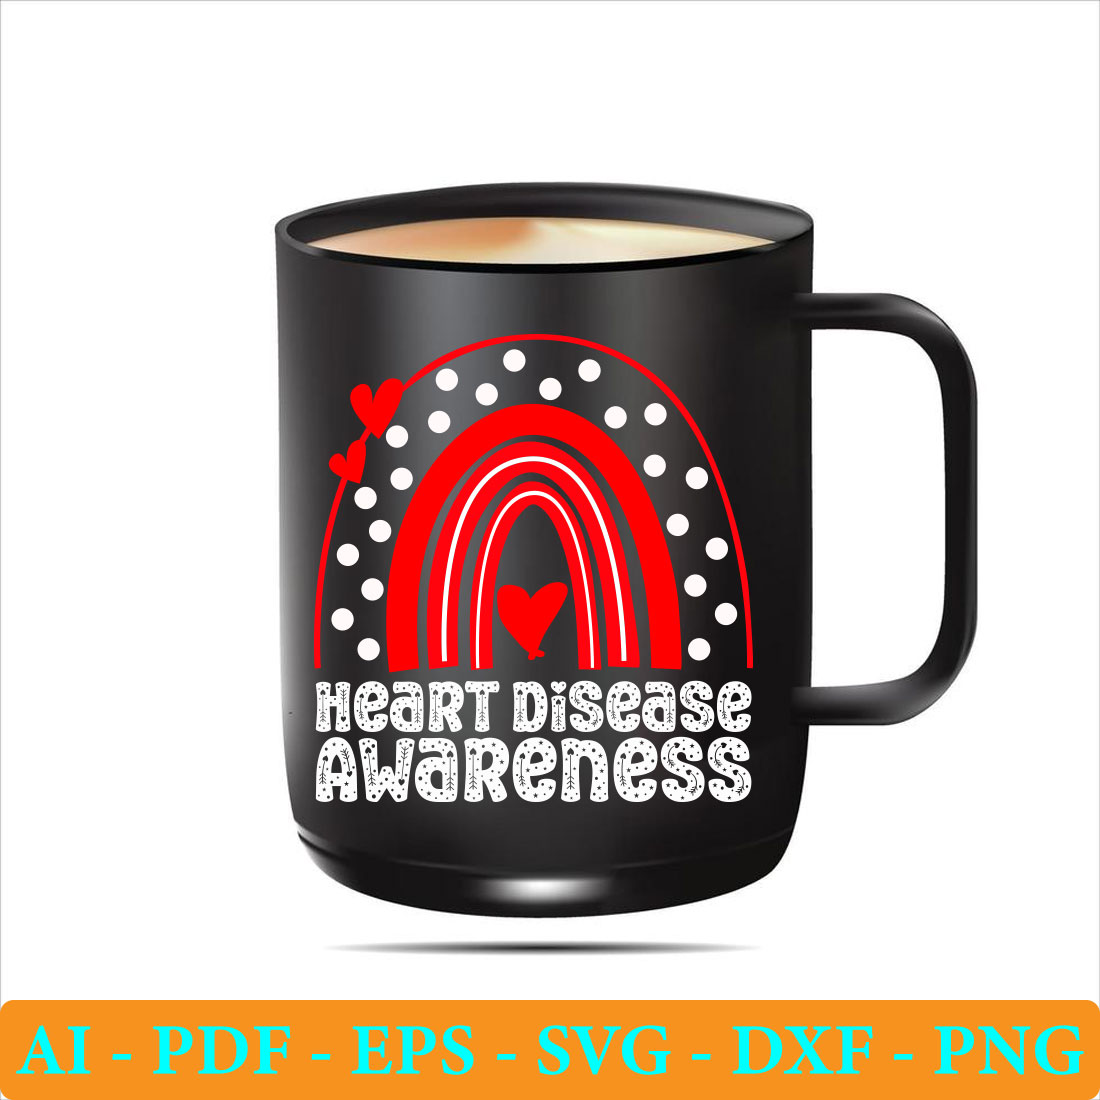 Black coffee mug with the words heart disease awareness printed on it.